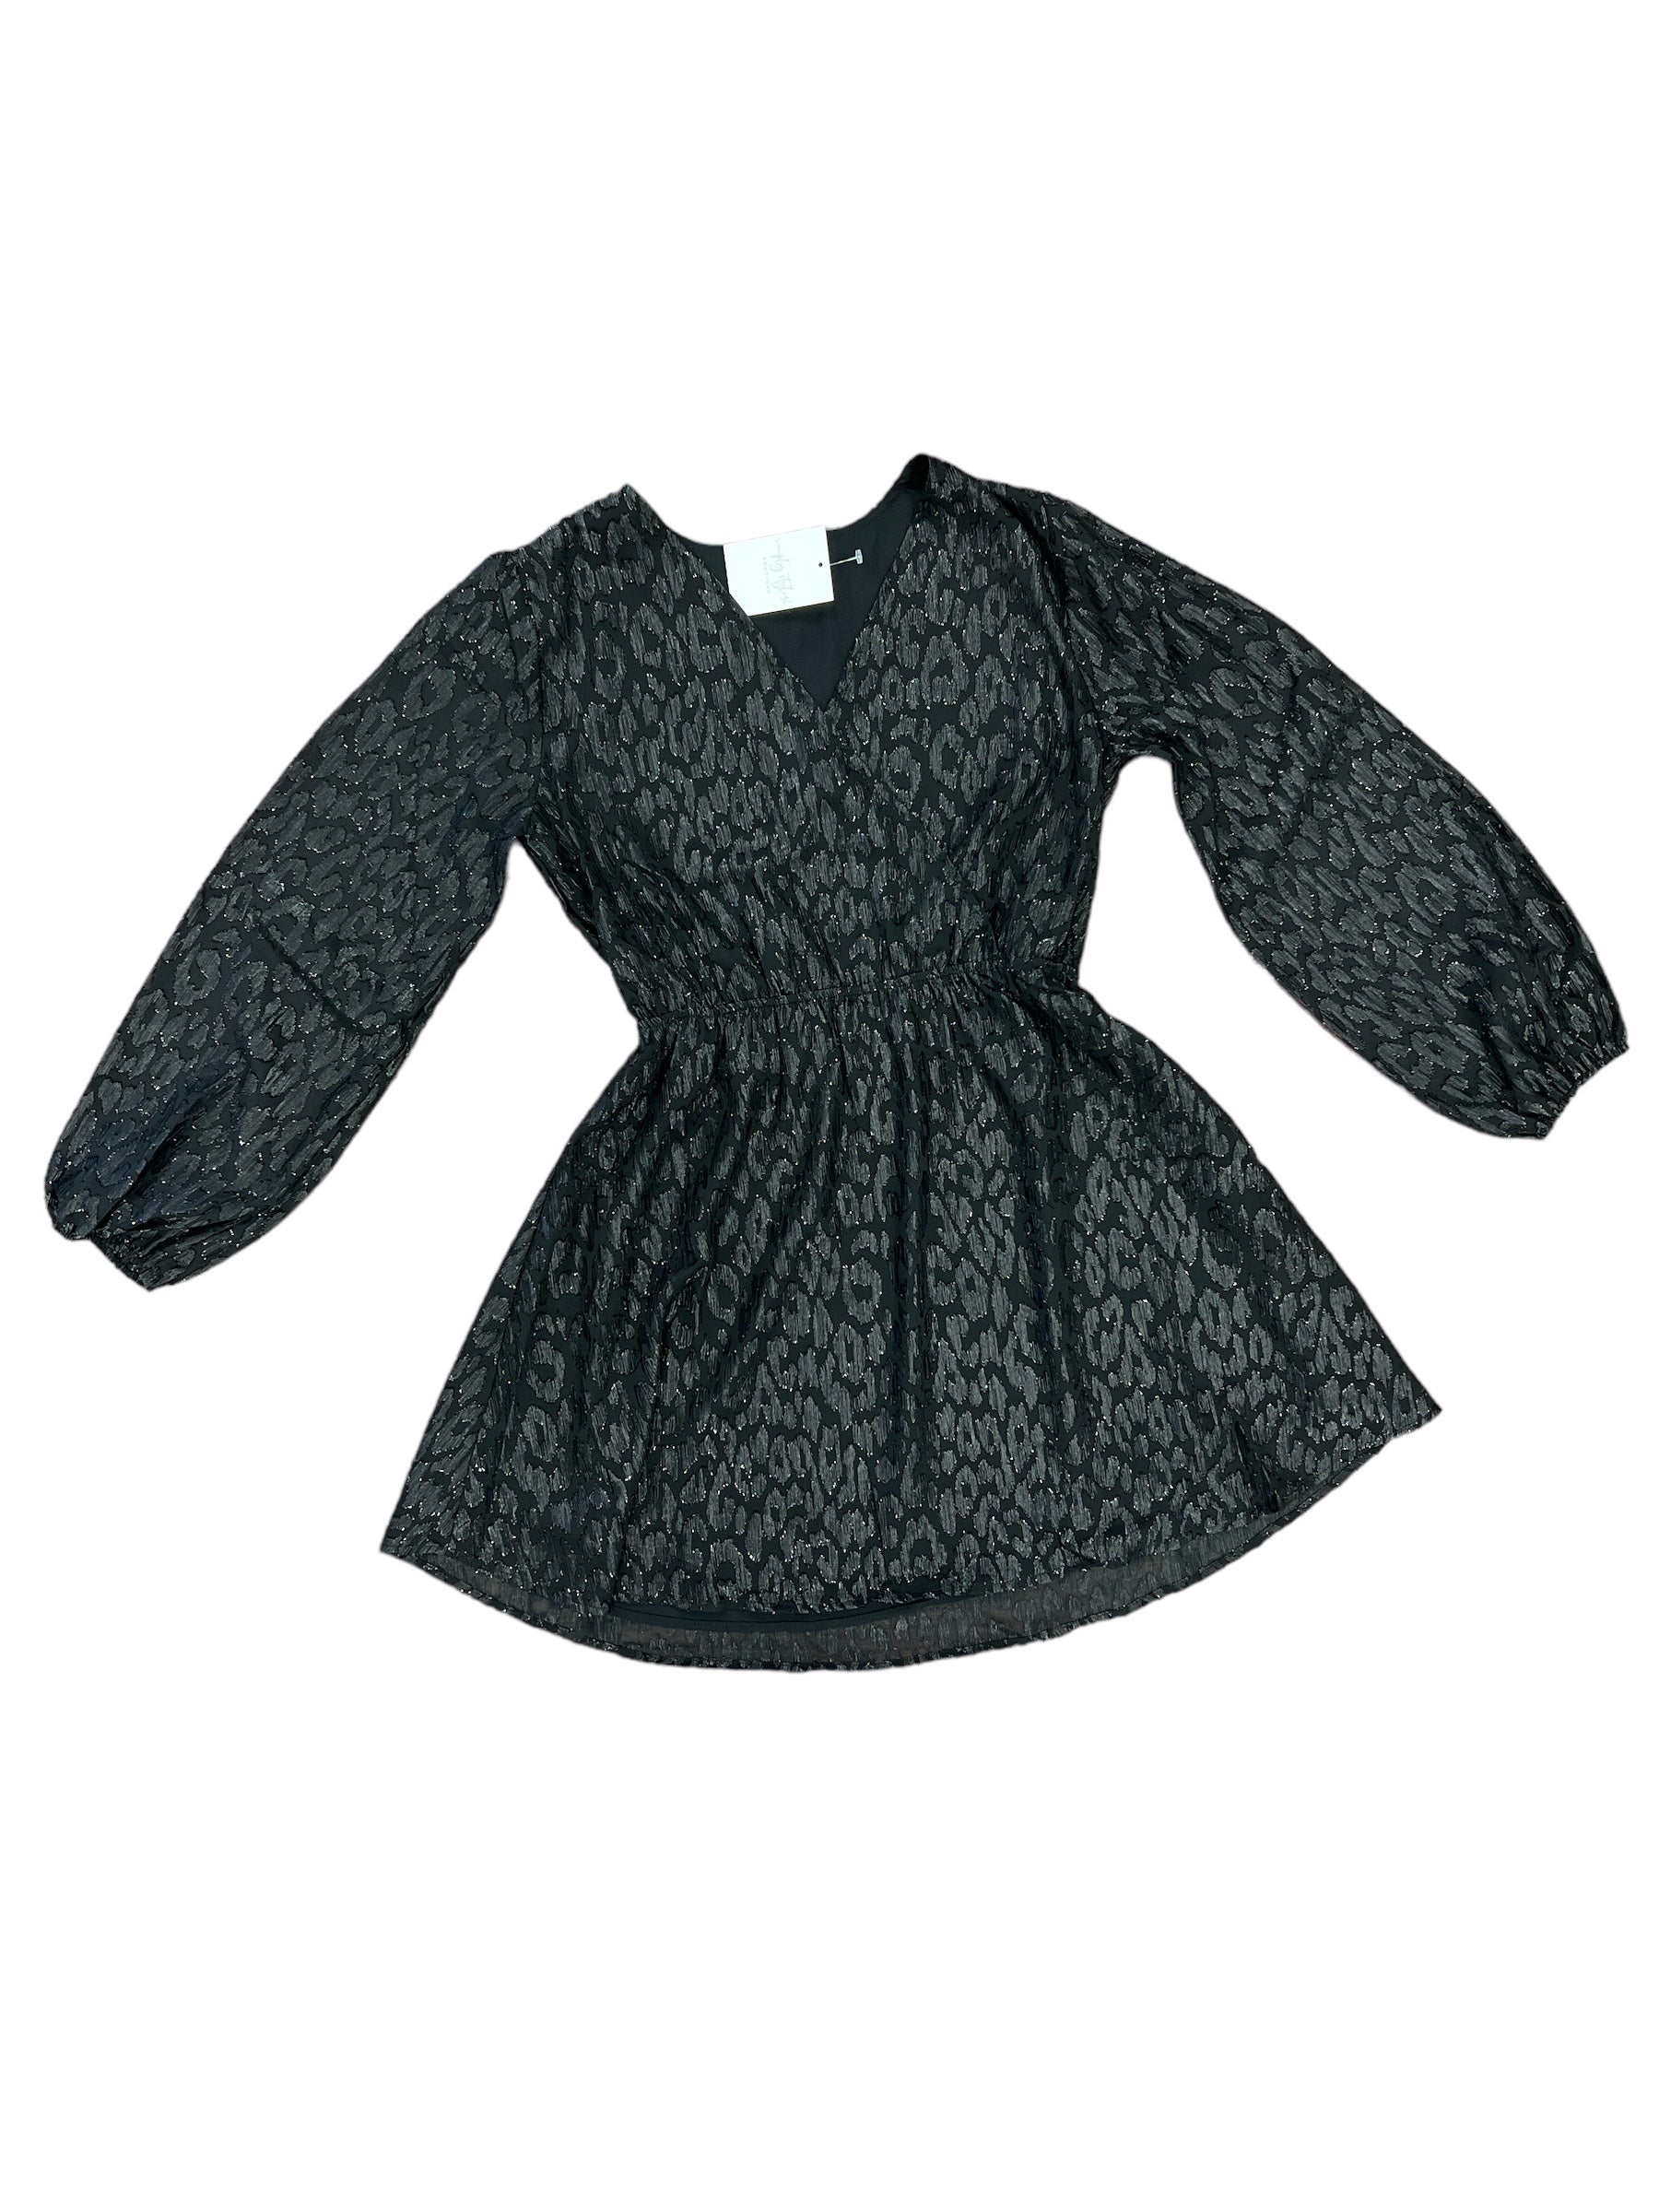 Black Jacquard Dress-310 Dresses-Simply Stylish Boutique-Simply Stylish Boutique | Women’s & Kid’s Fashion | Paducah, KY